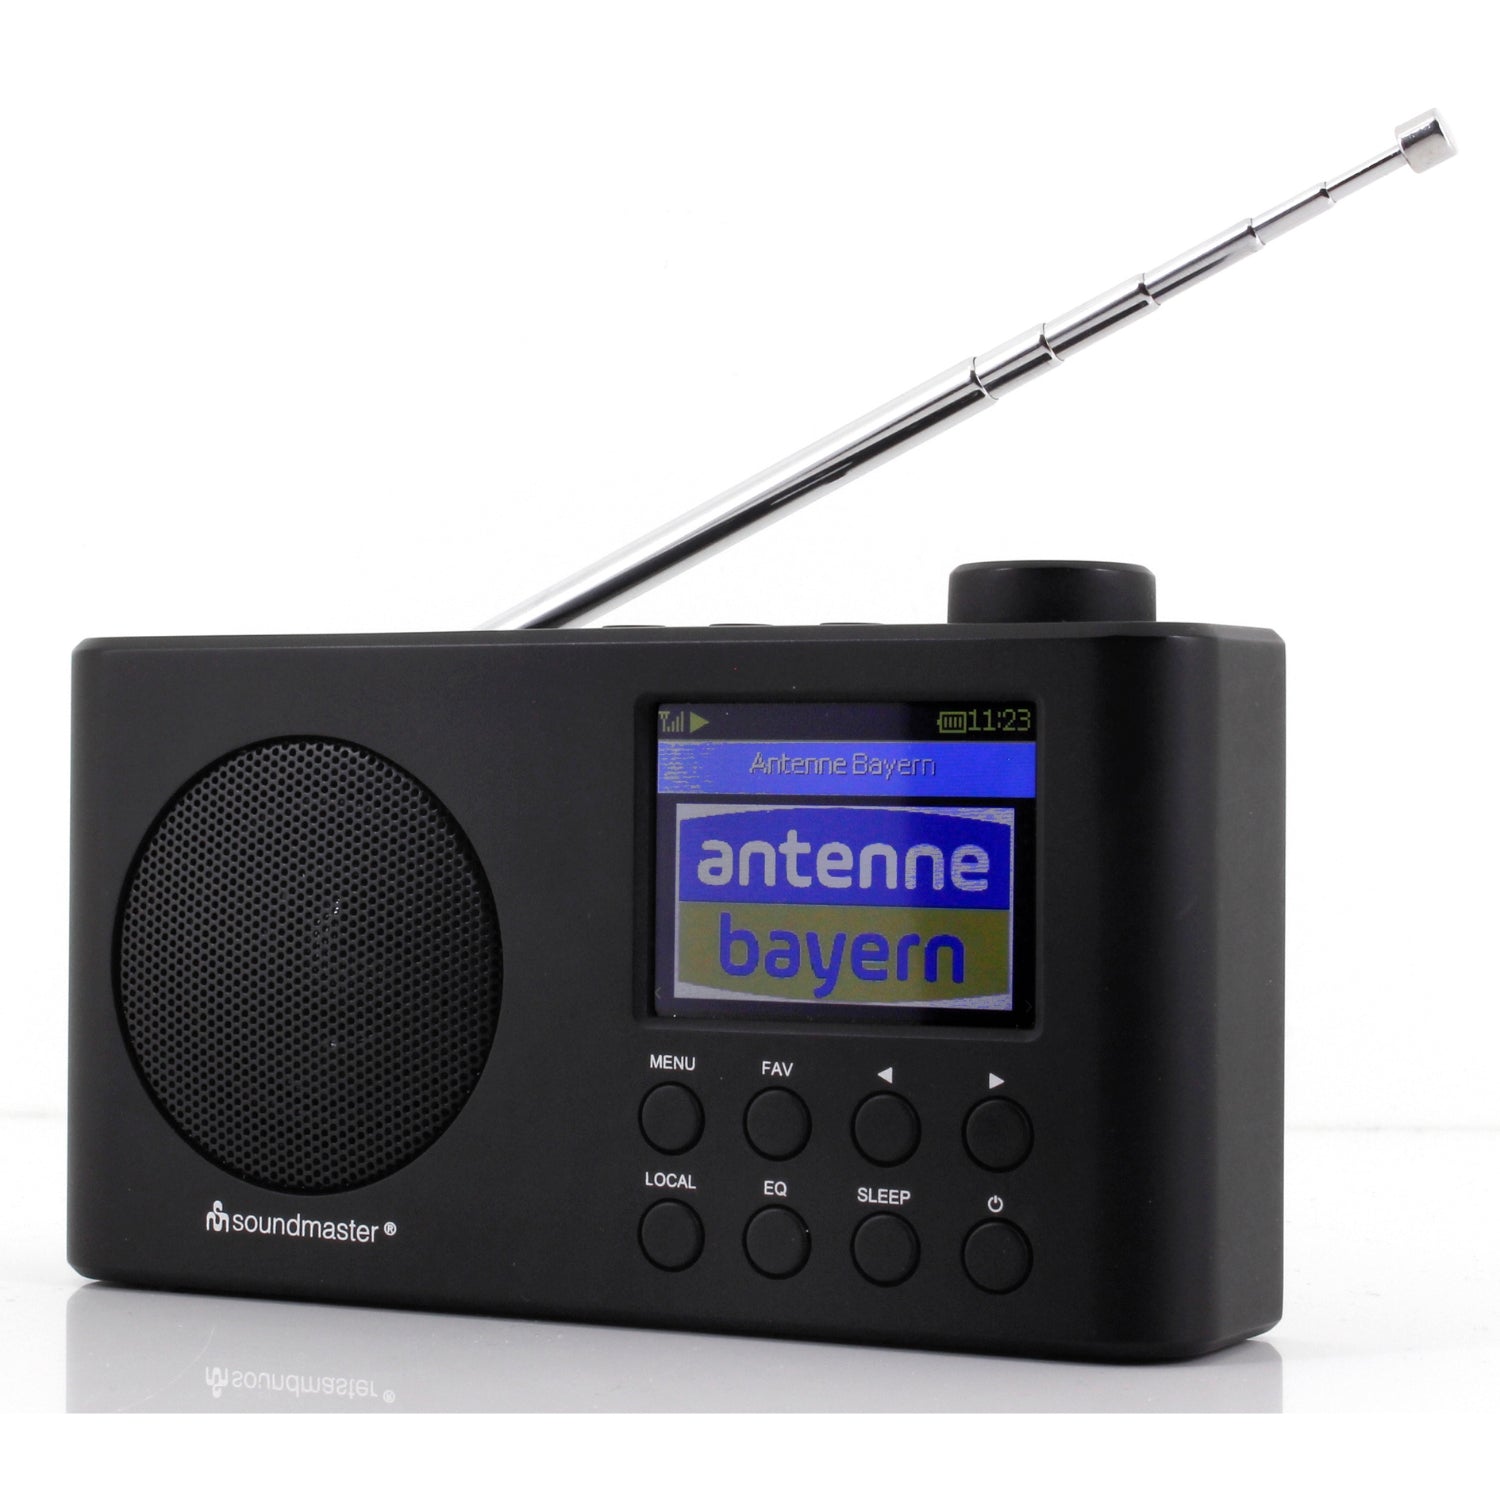 Soundmaster IR6500SW internet radio DAB+ FM radio Bluetooth network player battery integrated